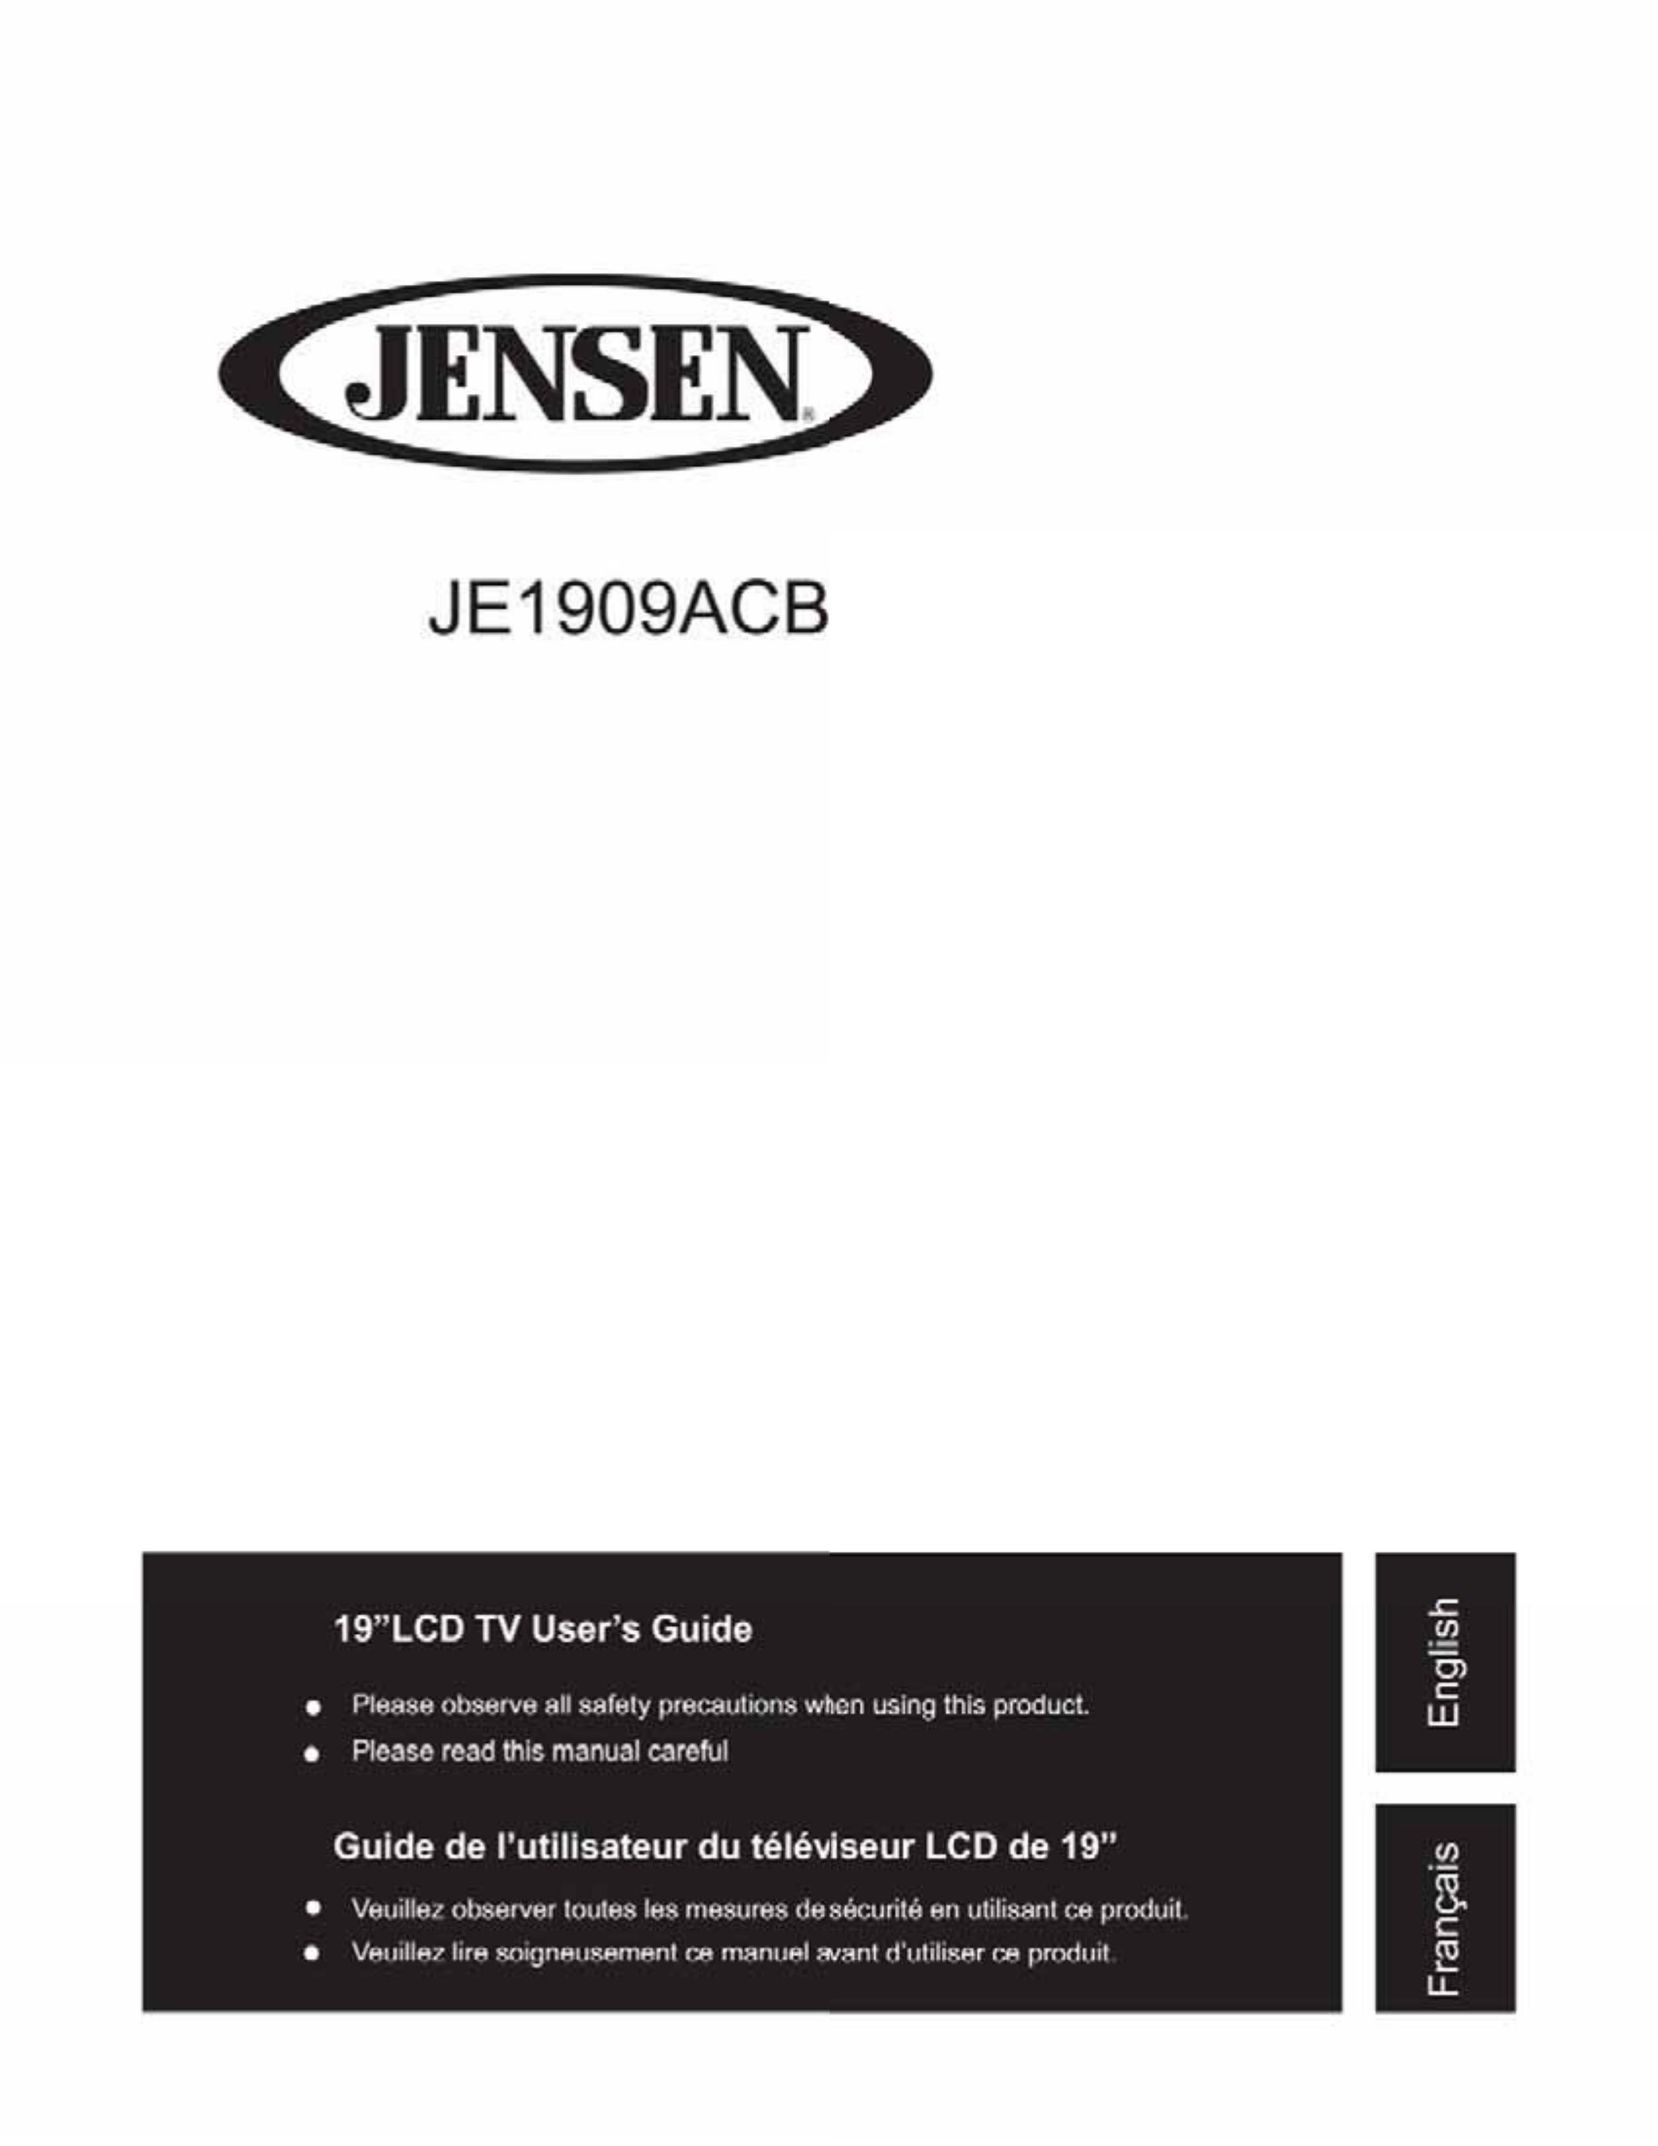 Jensen JE1909ACB Flat Panel Television User Manual